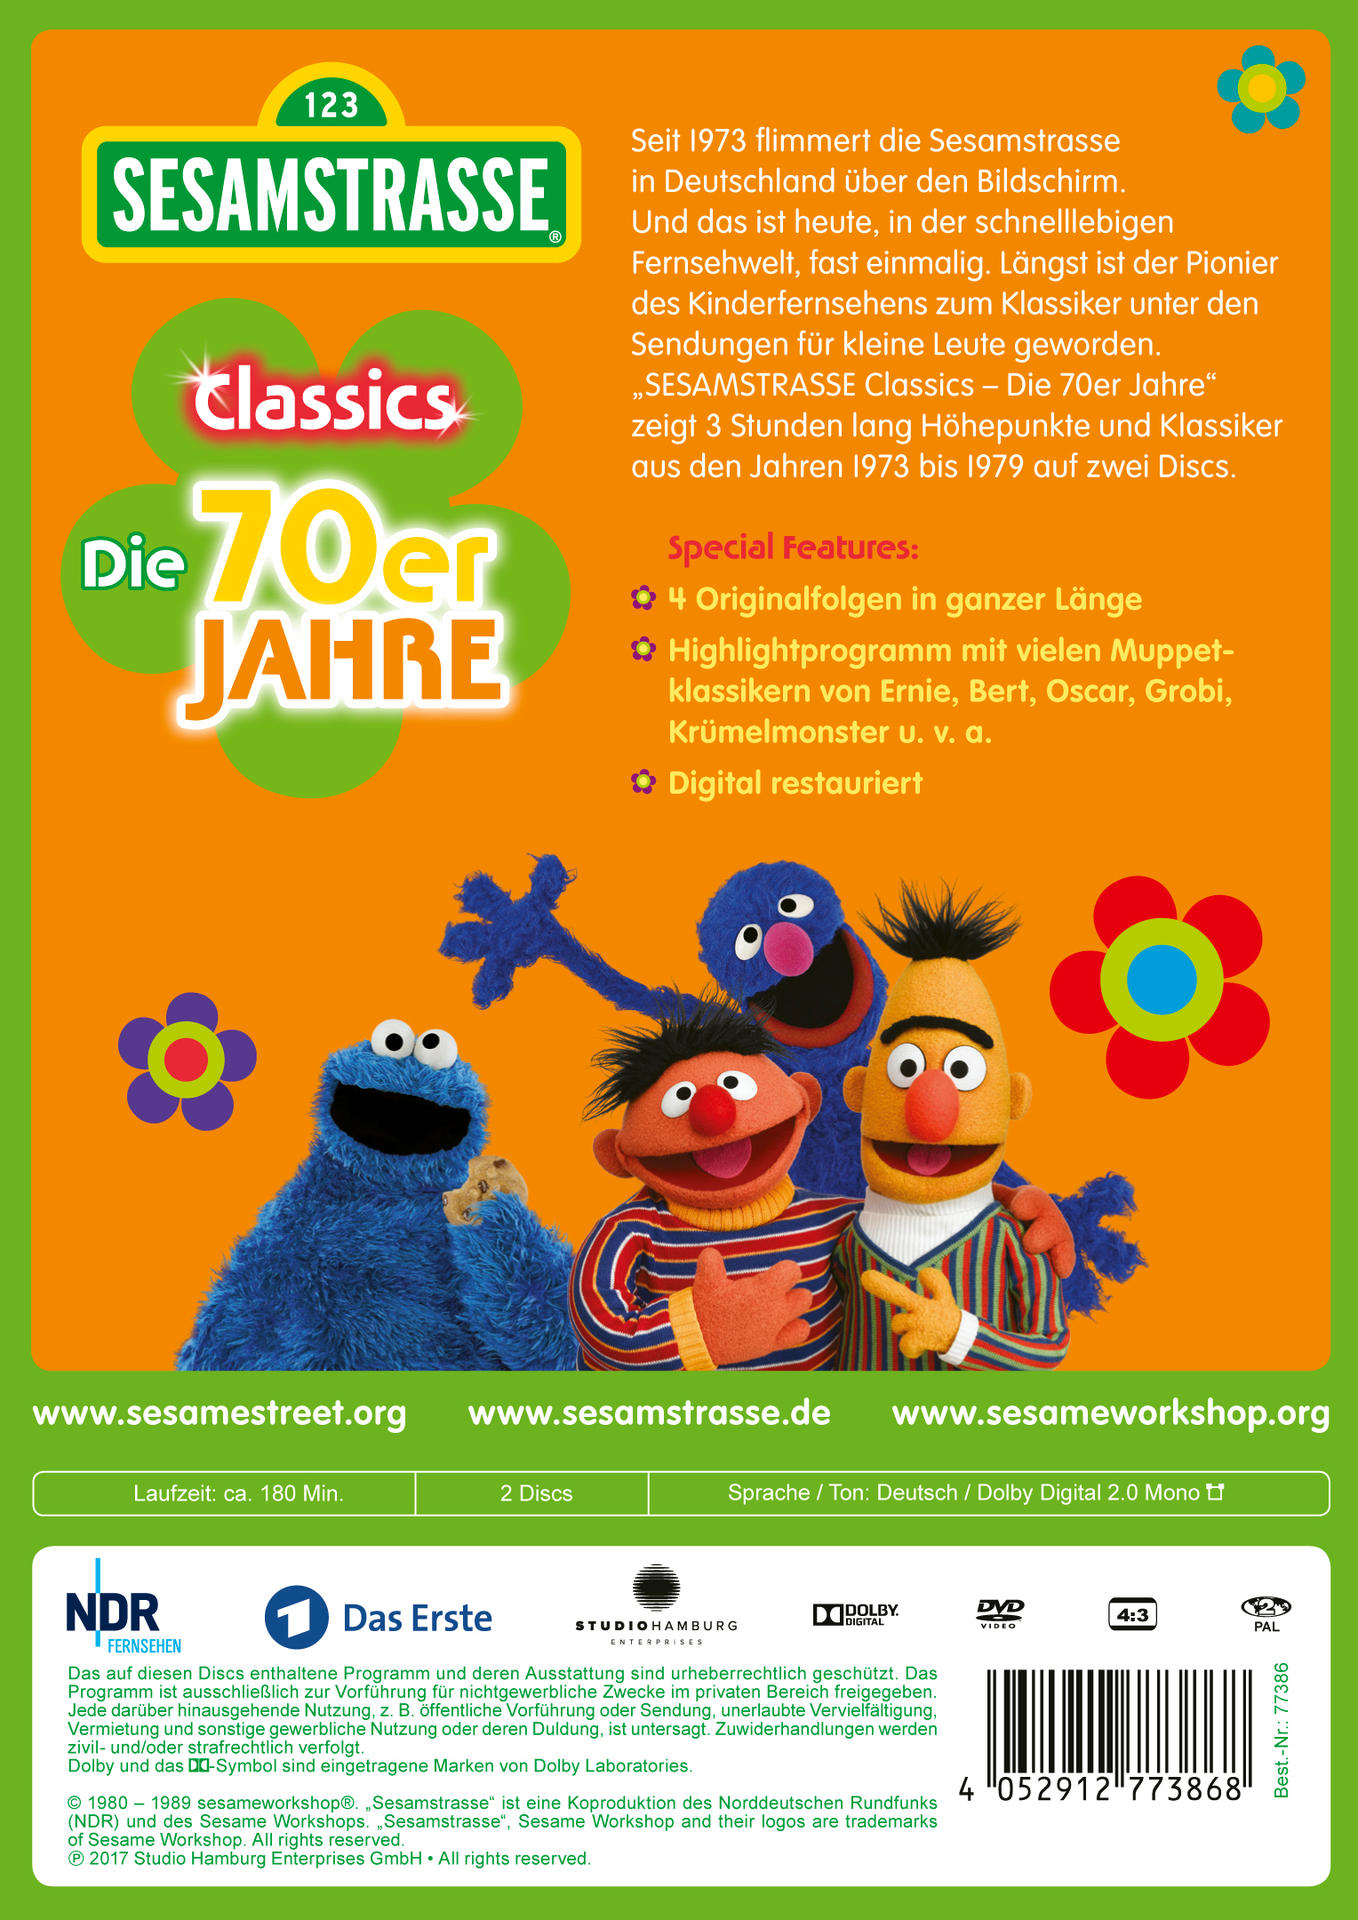 Sesamstraße Classics DVD 70er Die - Jahre